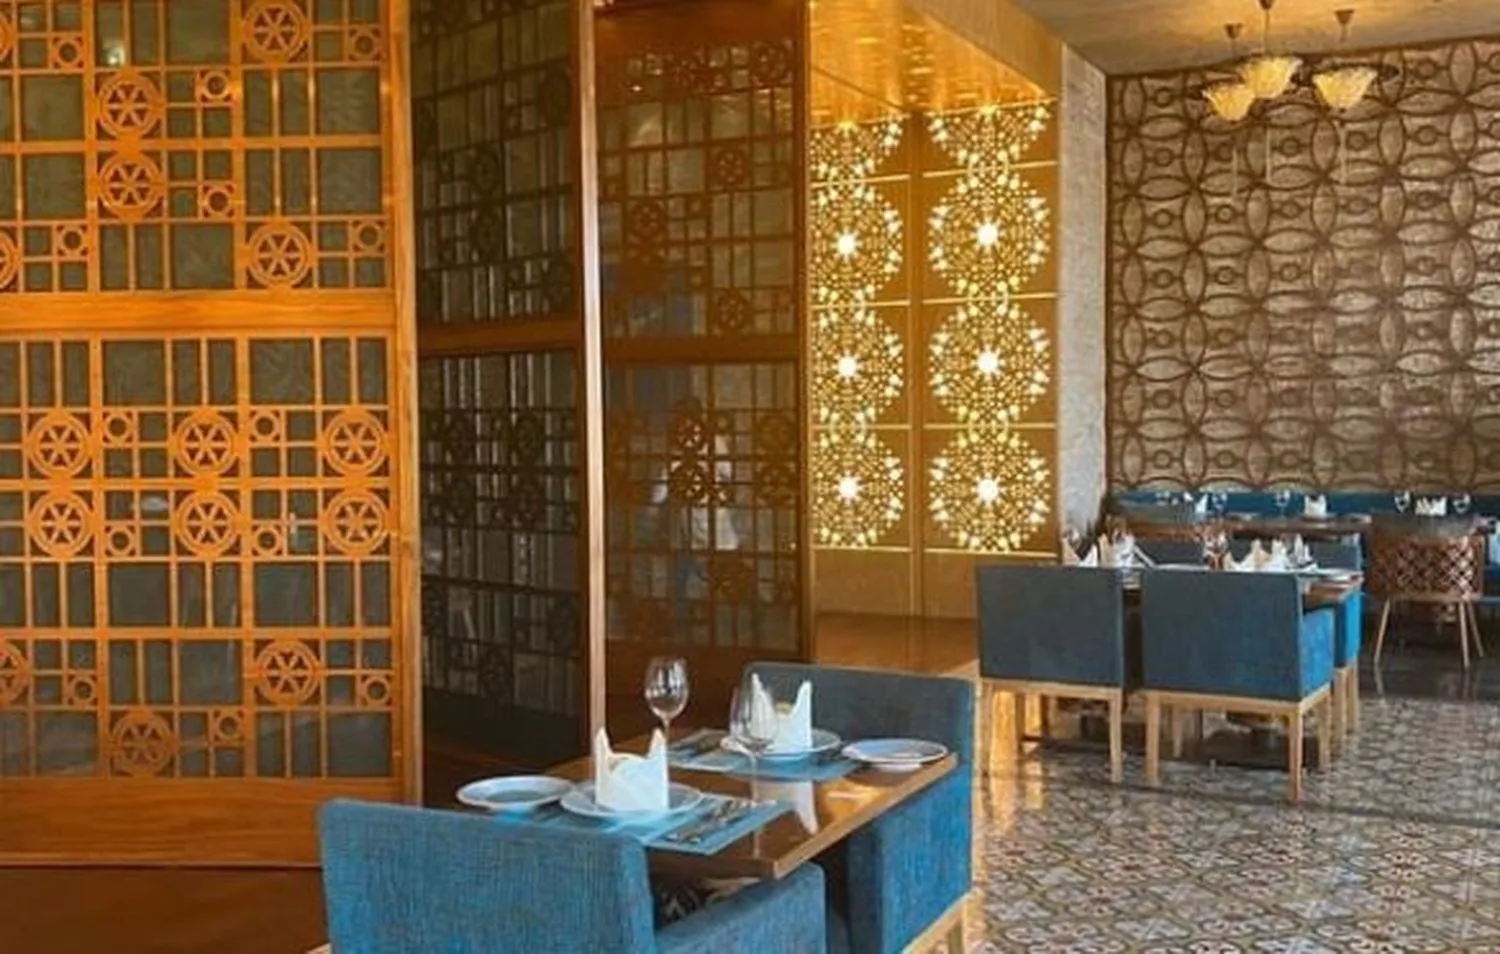 Al Sufra restaurant Doha